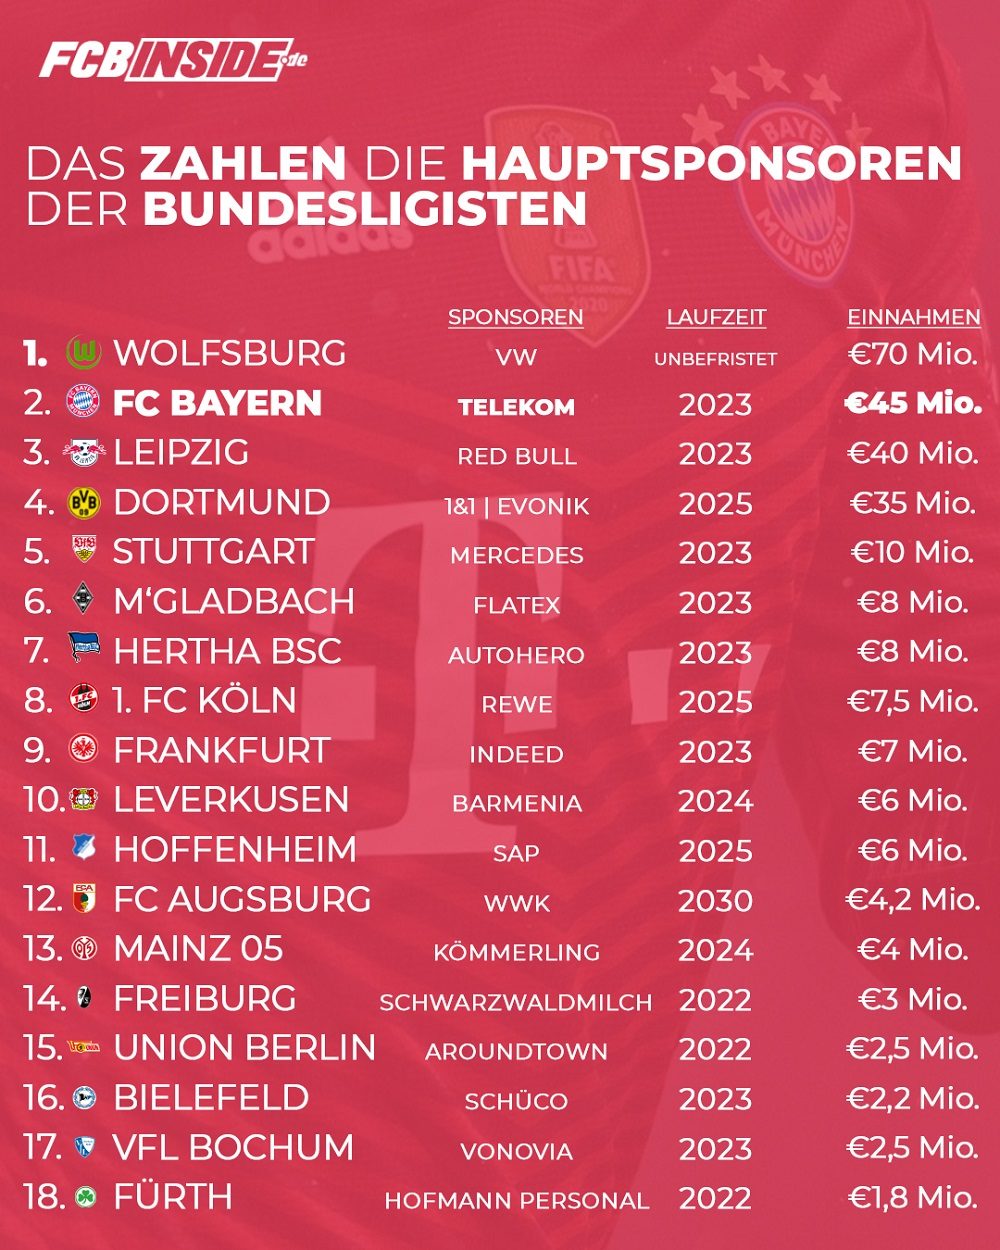 Sponsoren-Ranking in der Bundesliga